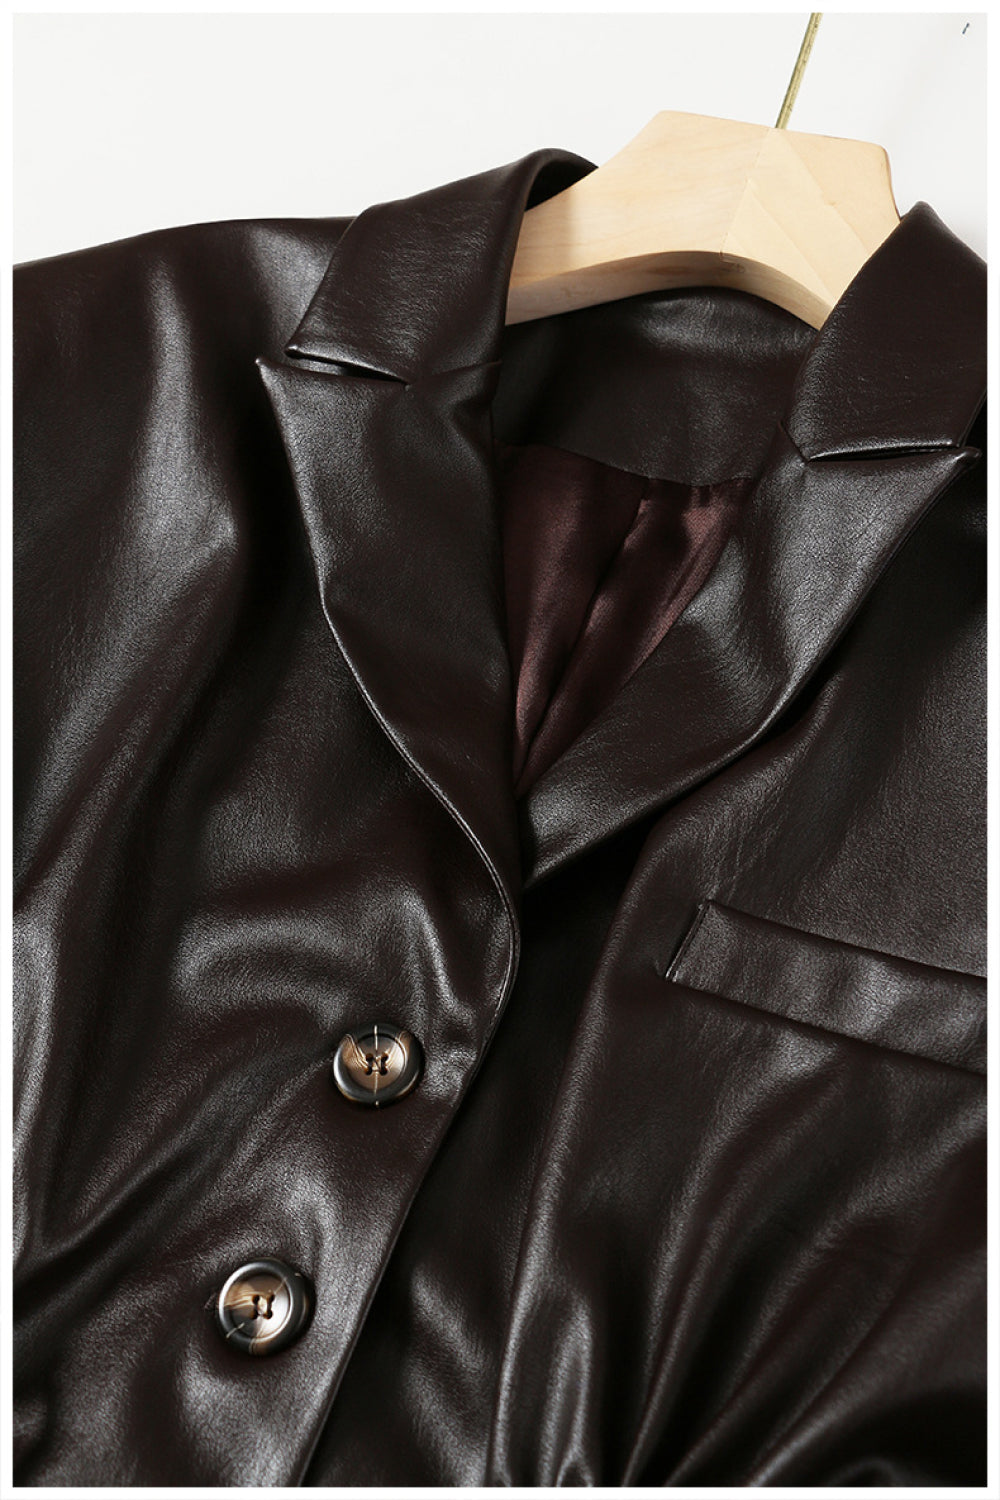 GAWQO Drawstring Waist PU Leather Coat